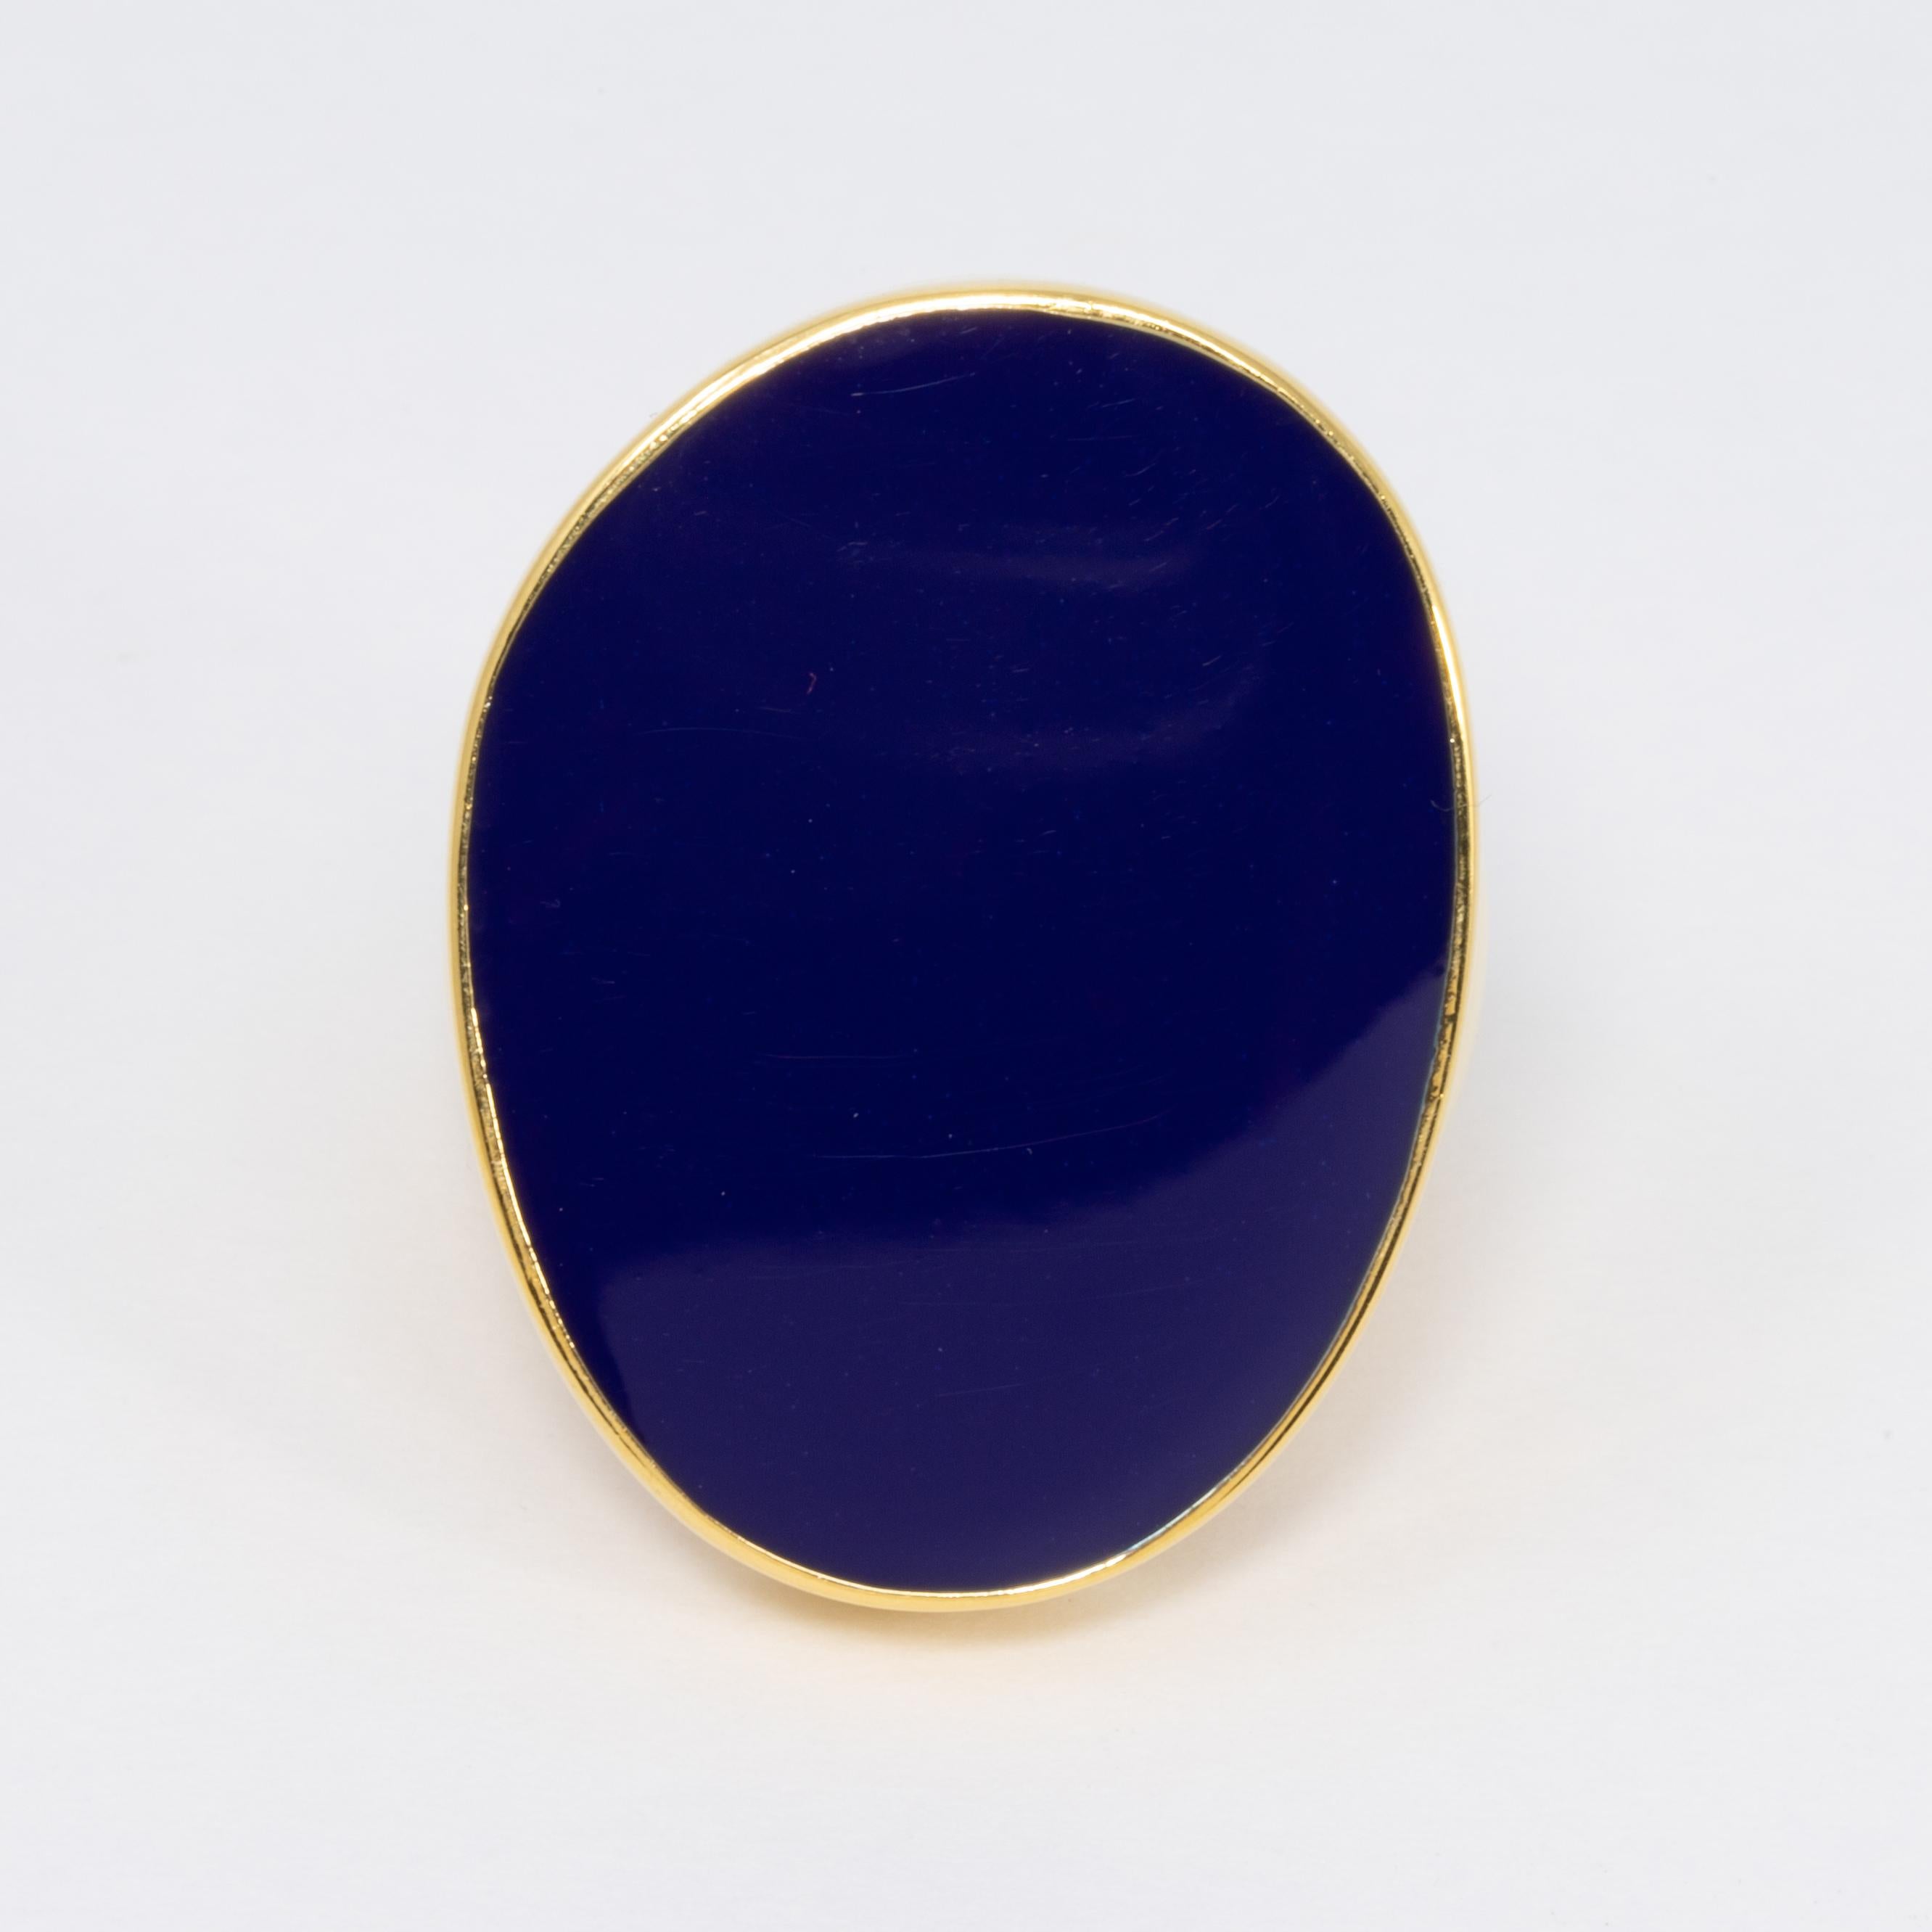 Modern Kenneth Jay Lane Lapis Lazuli Blue Flat Enamel Oval Cocktail Ring in Gold, KJL